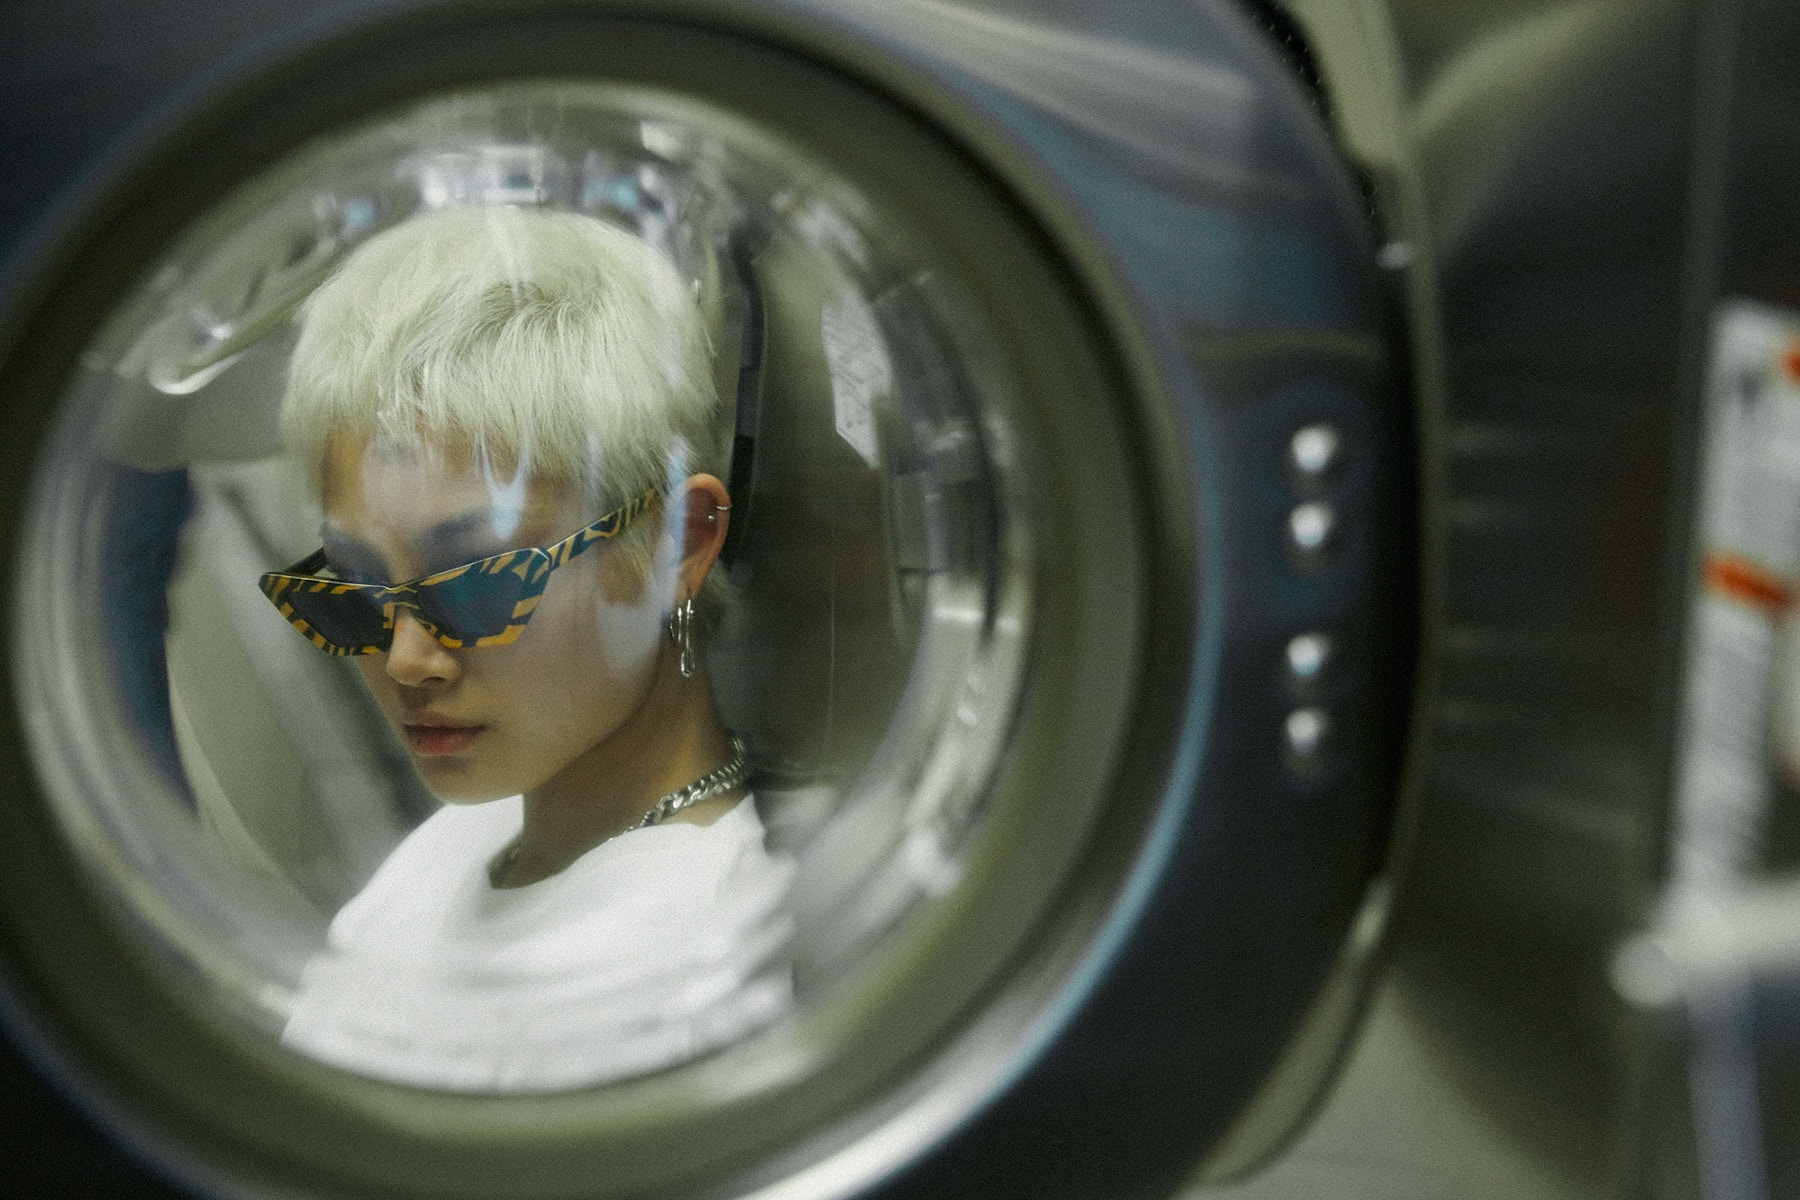 Swedish Eyewear Designer Chimi Eyewear Collaborates with Korean Designer Sundae School For "Tiger Mom" Collaboration